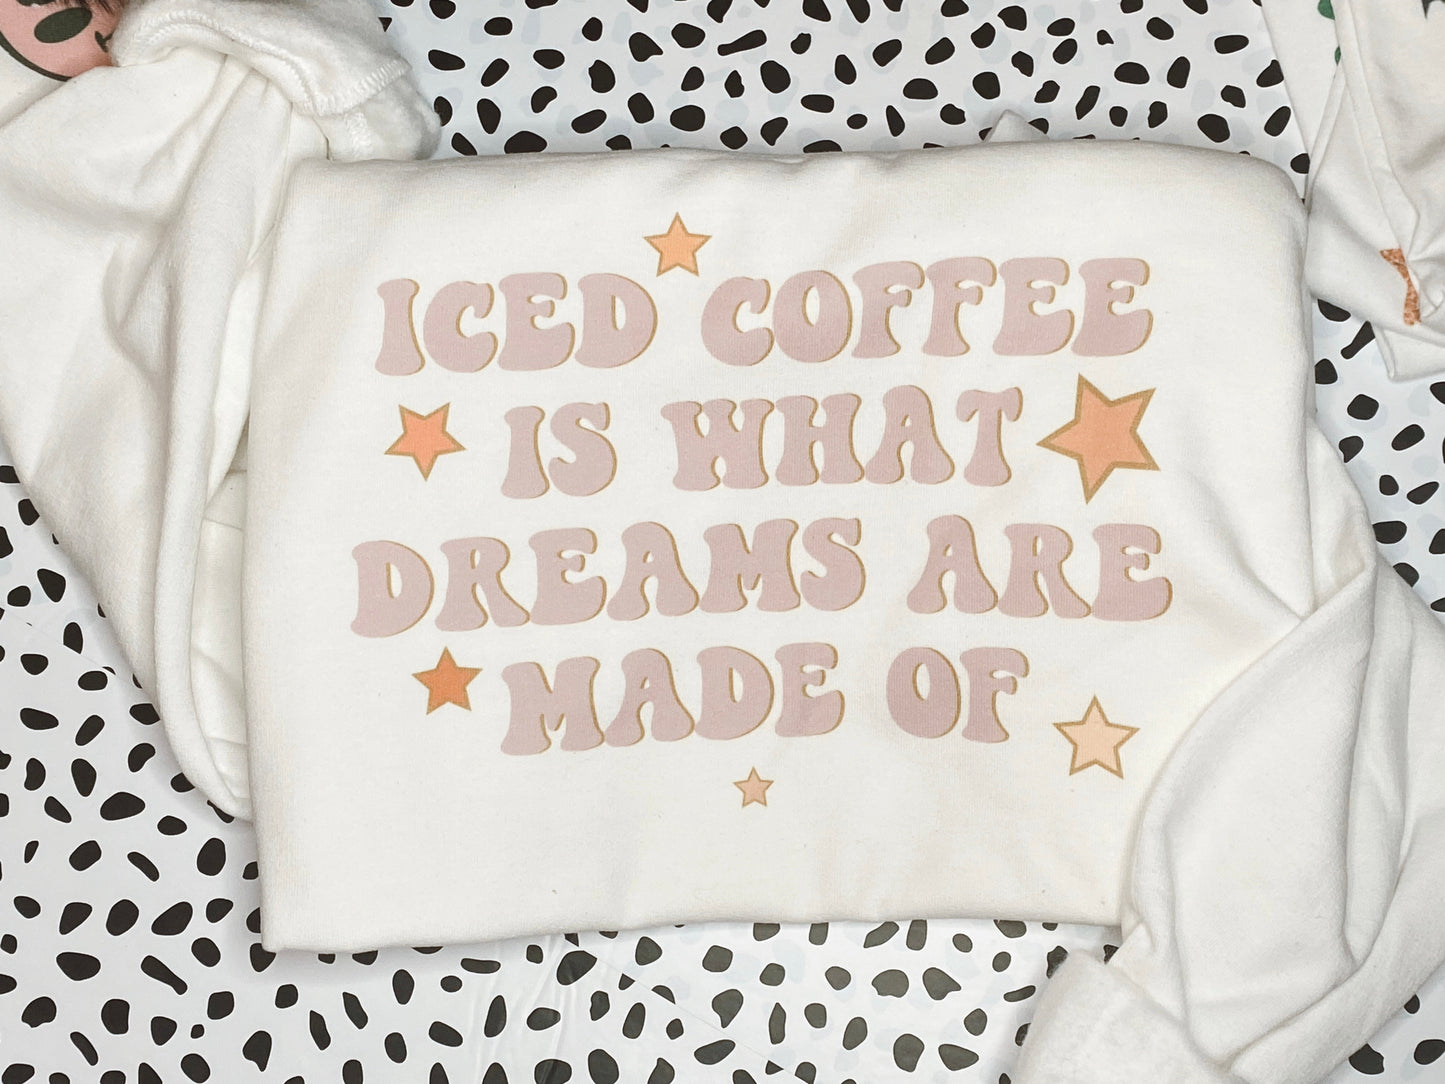 Iced Coffee Dreams